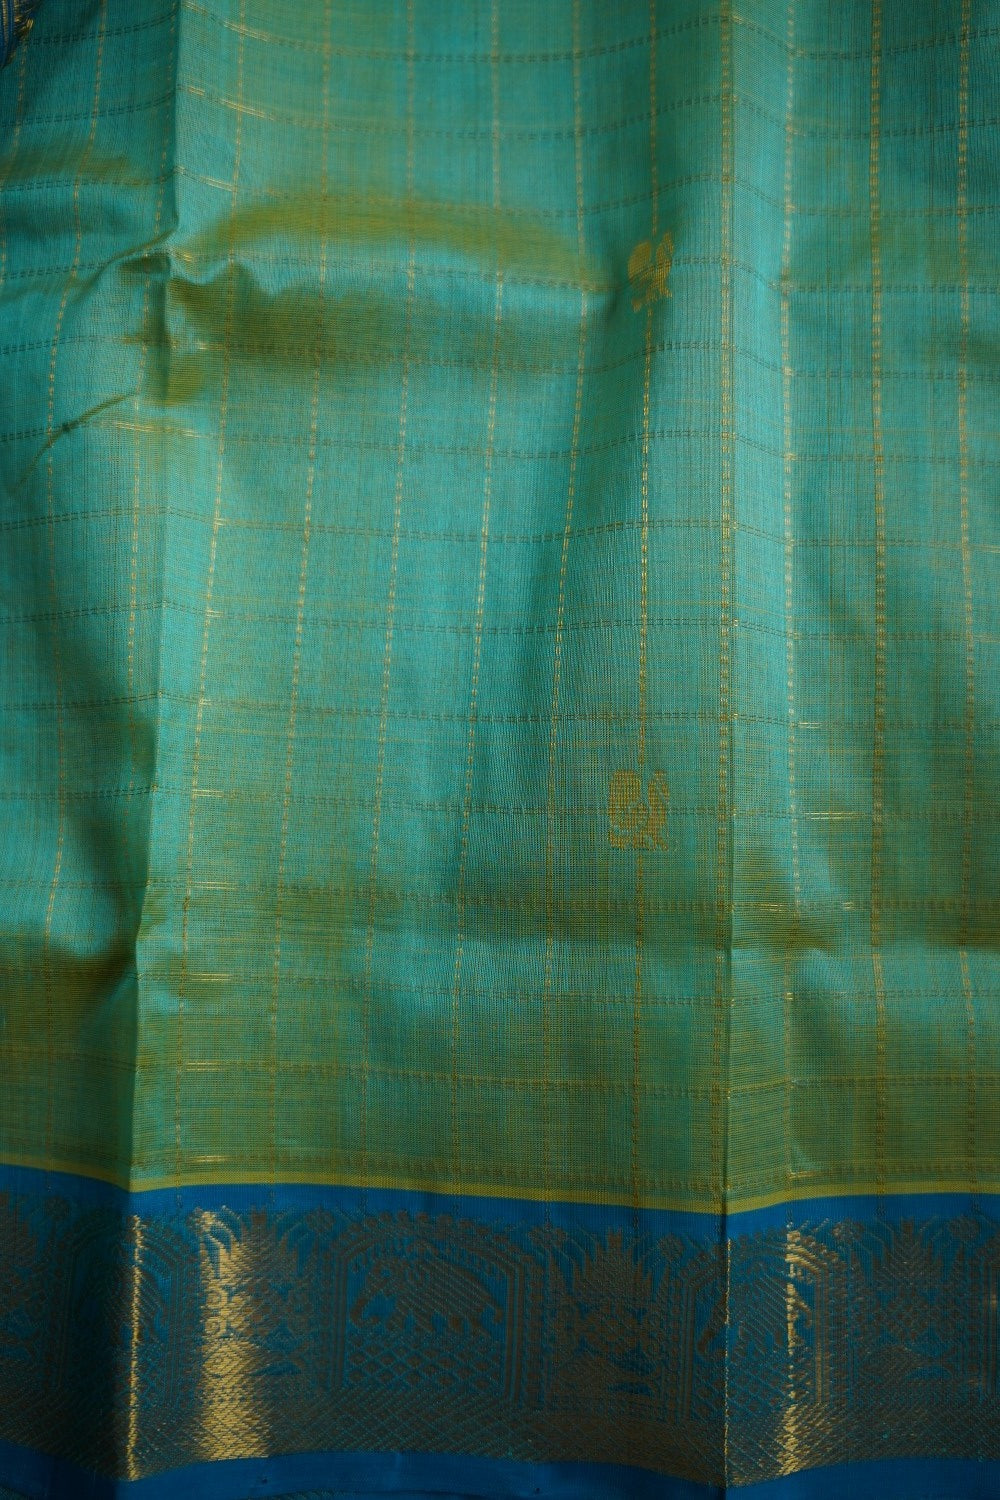 10 Yards Kanchi Handloom Silk Cotton Saree PC11104